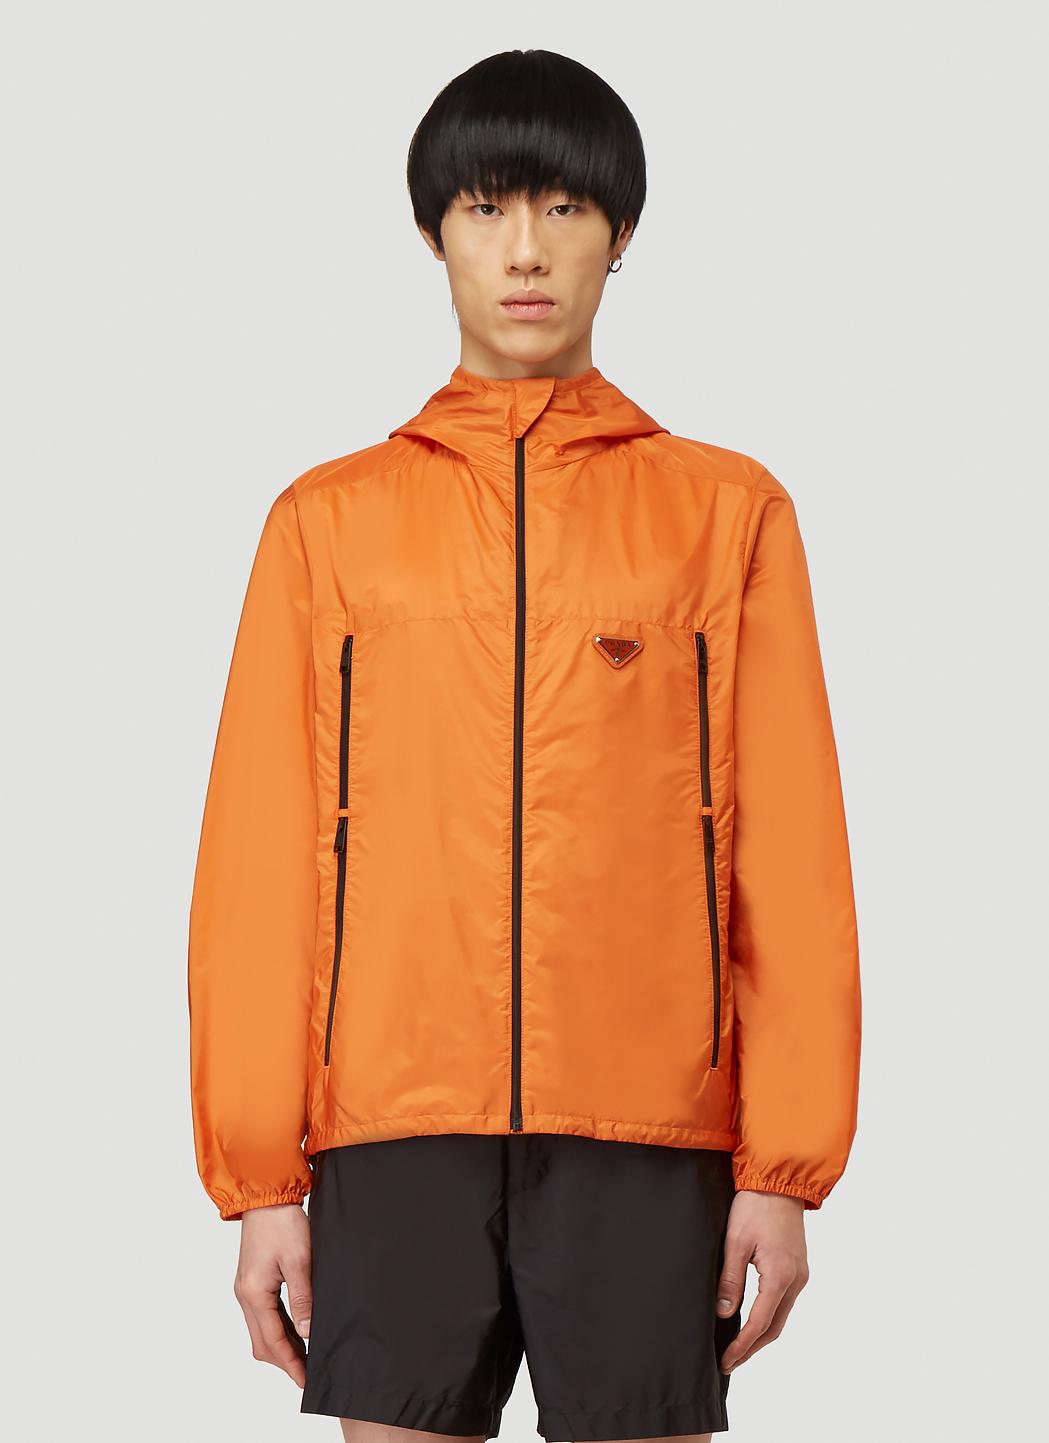 Prada Synthetic Nylon Zip-up Jacket in Orange for Men - Lyst